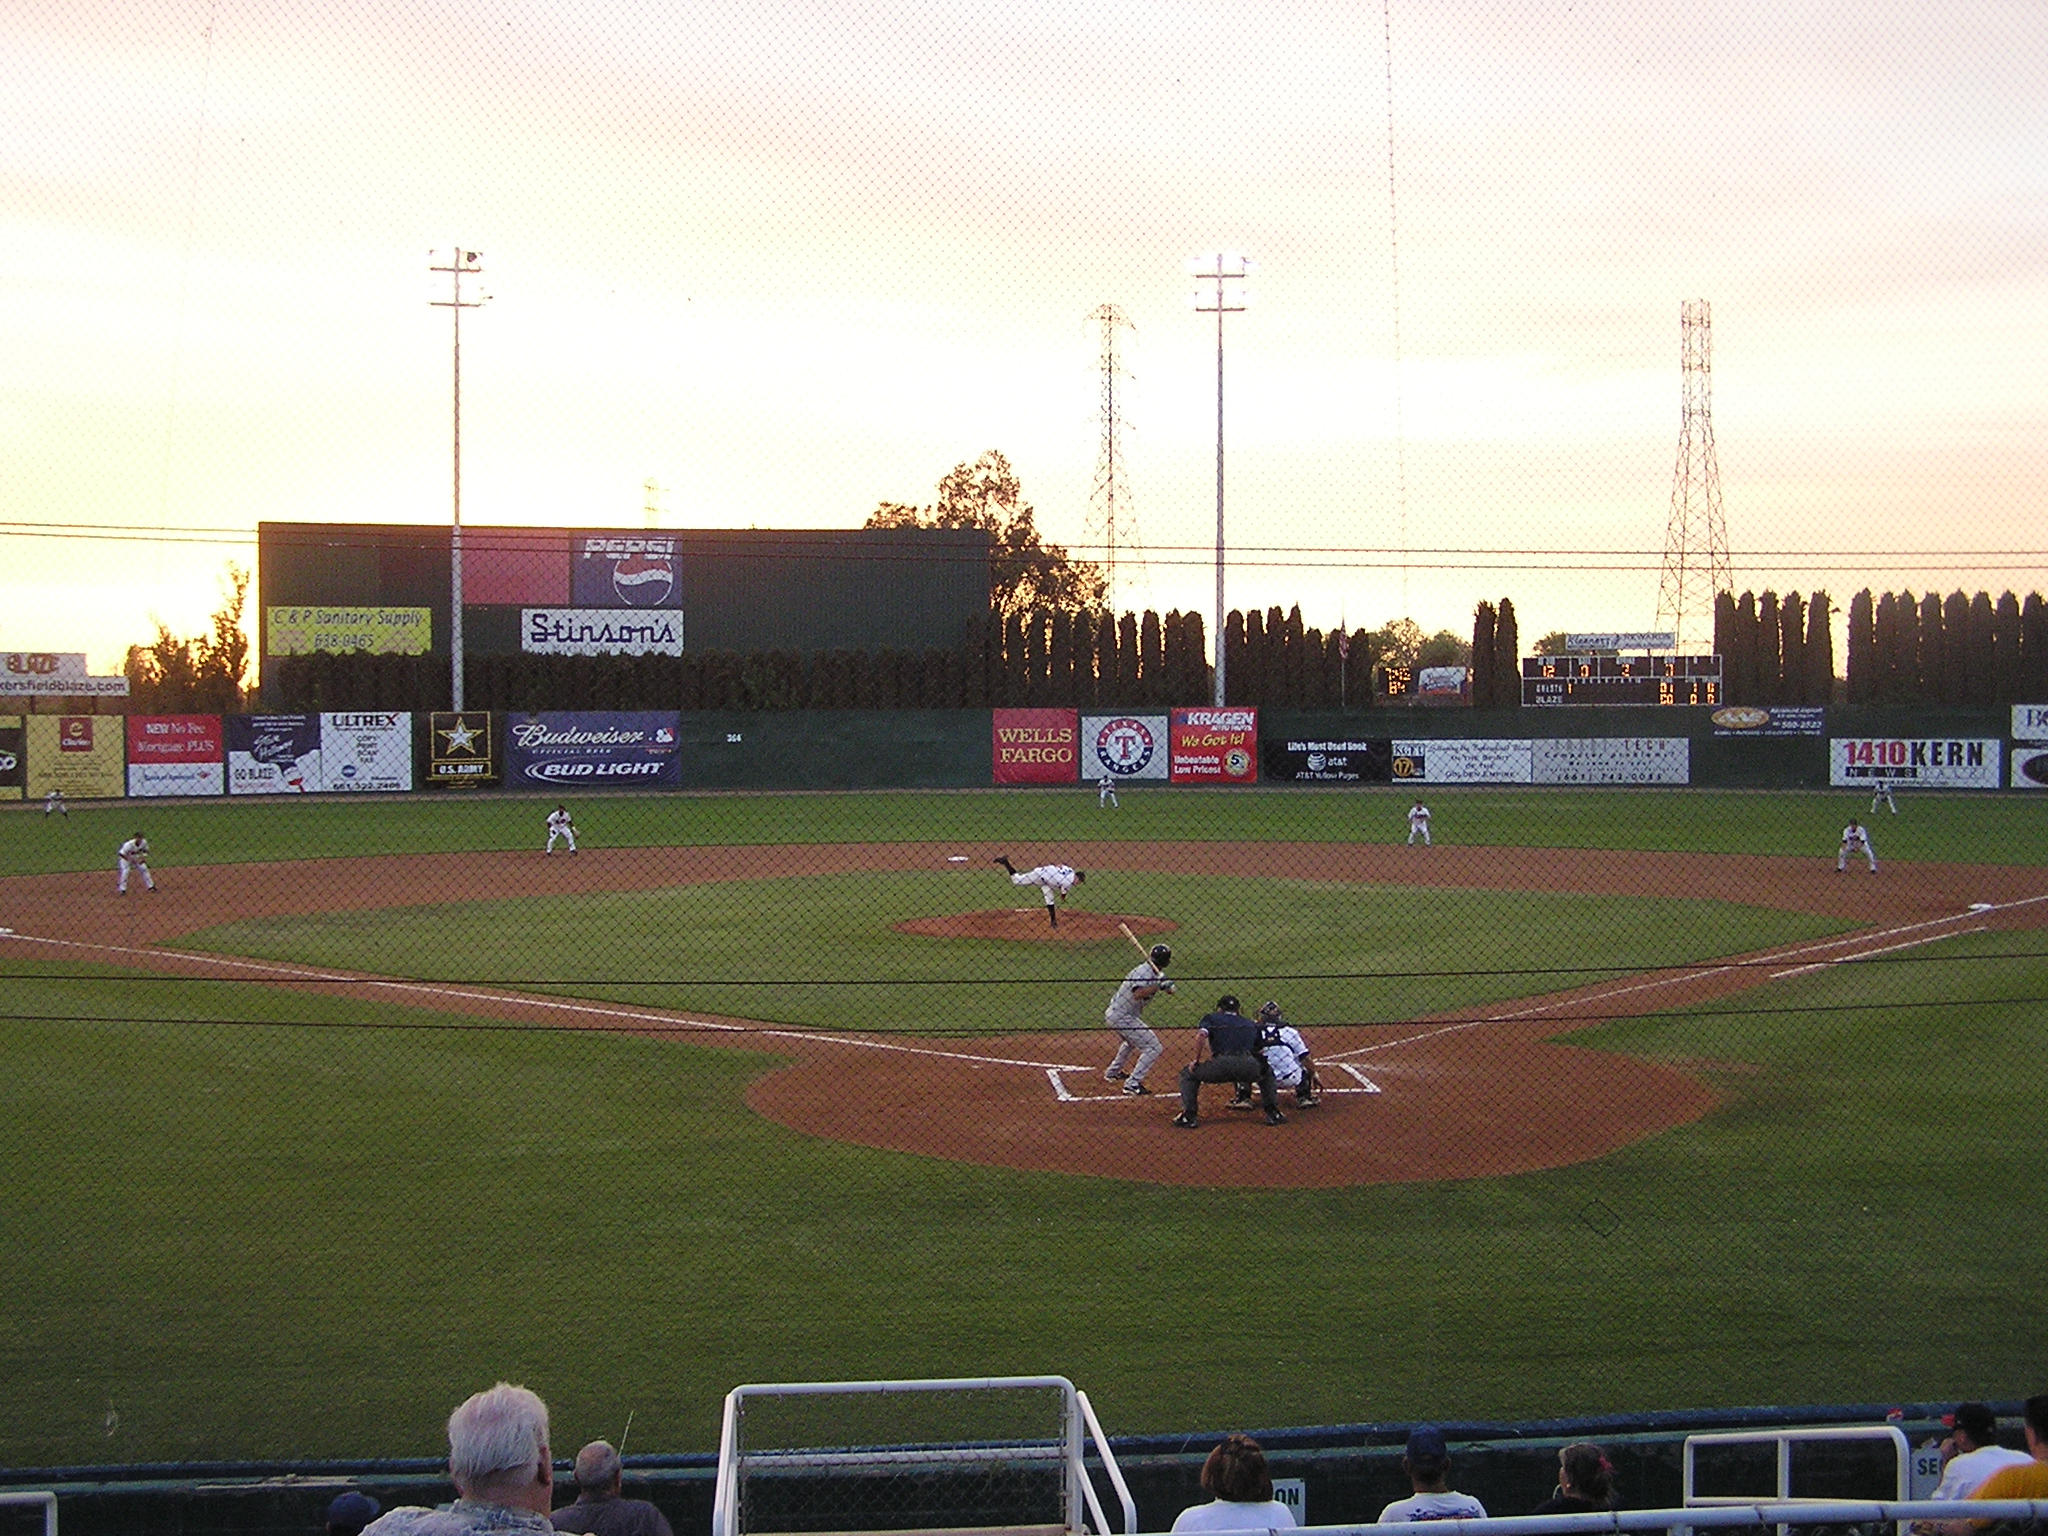 The Pitch - Sam Lynn Ballpark, Bakersfield, Ca.